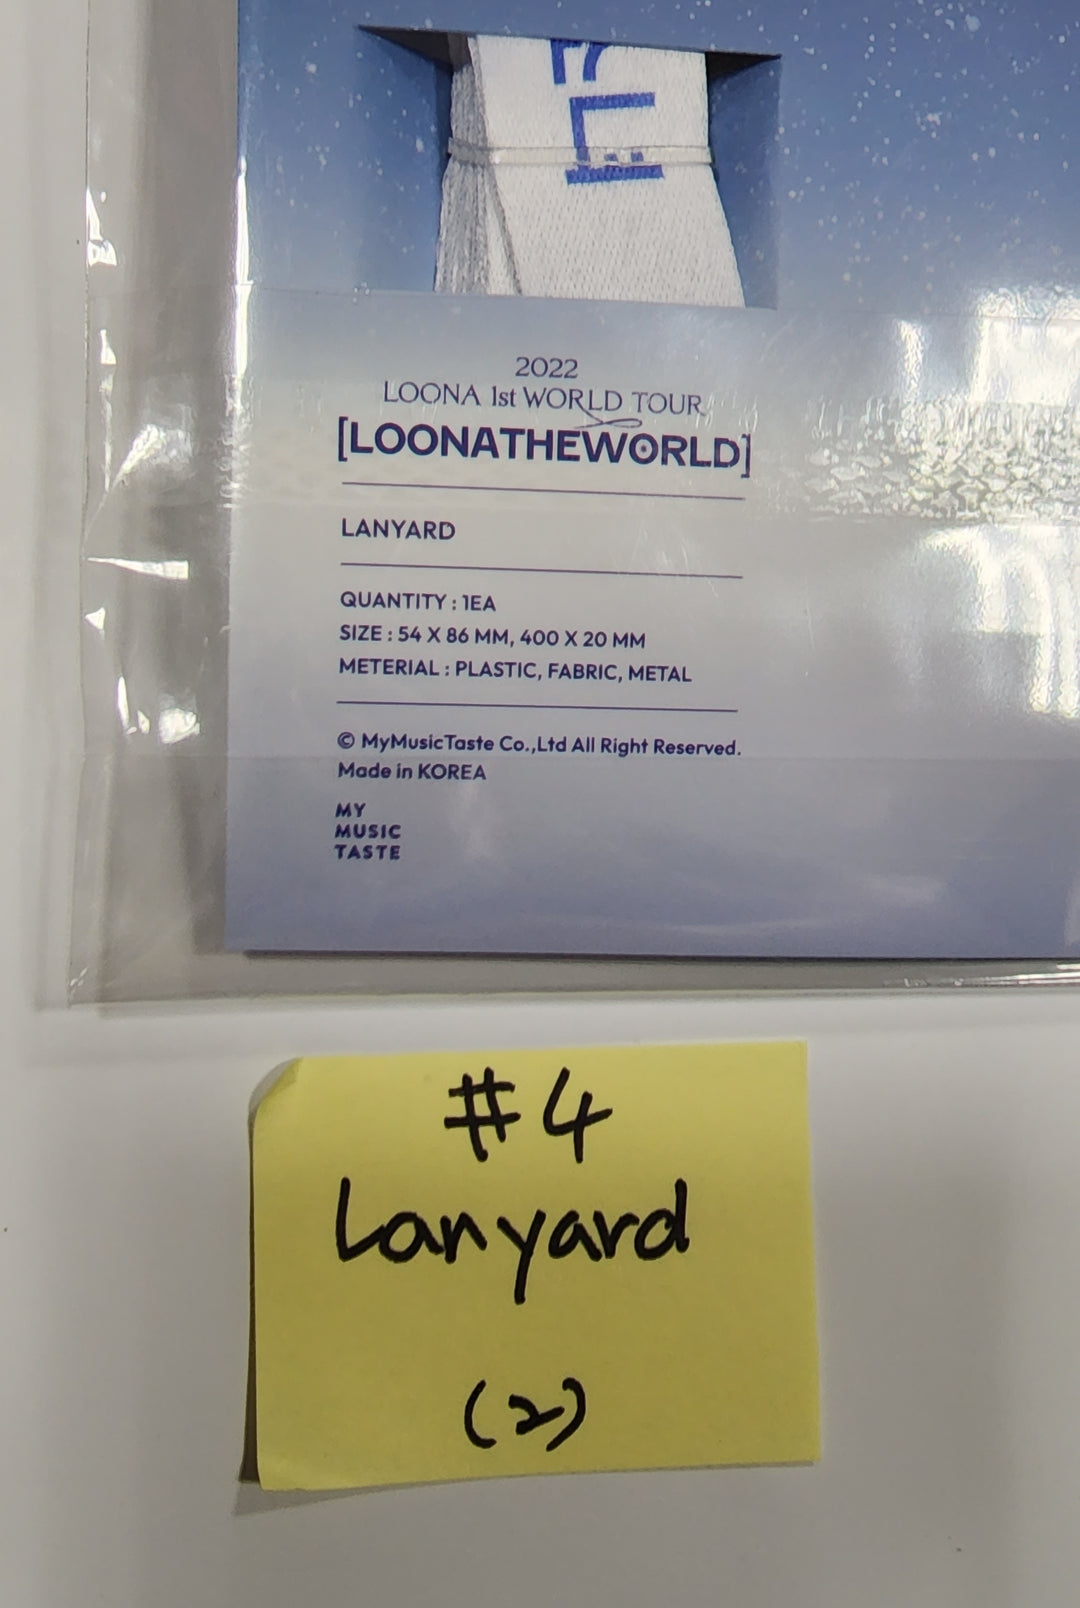 Loona "LOONATHEWORLD" 2022 Loona 1st ワールドツアー - 公式MD